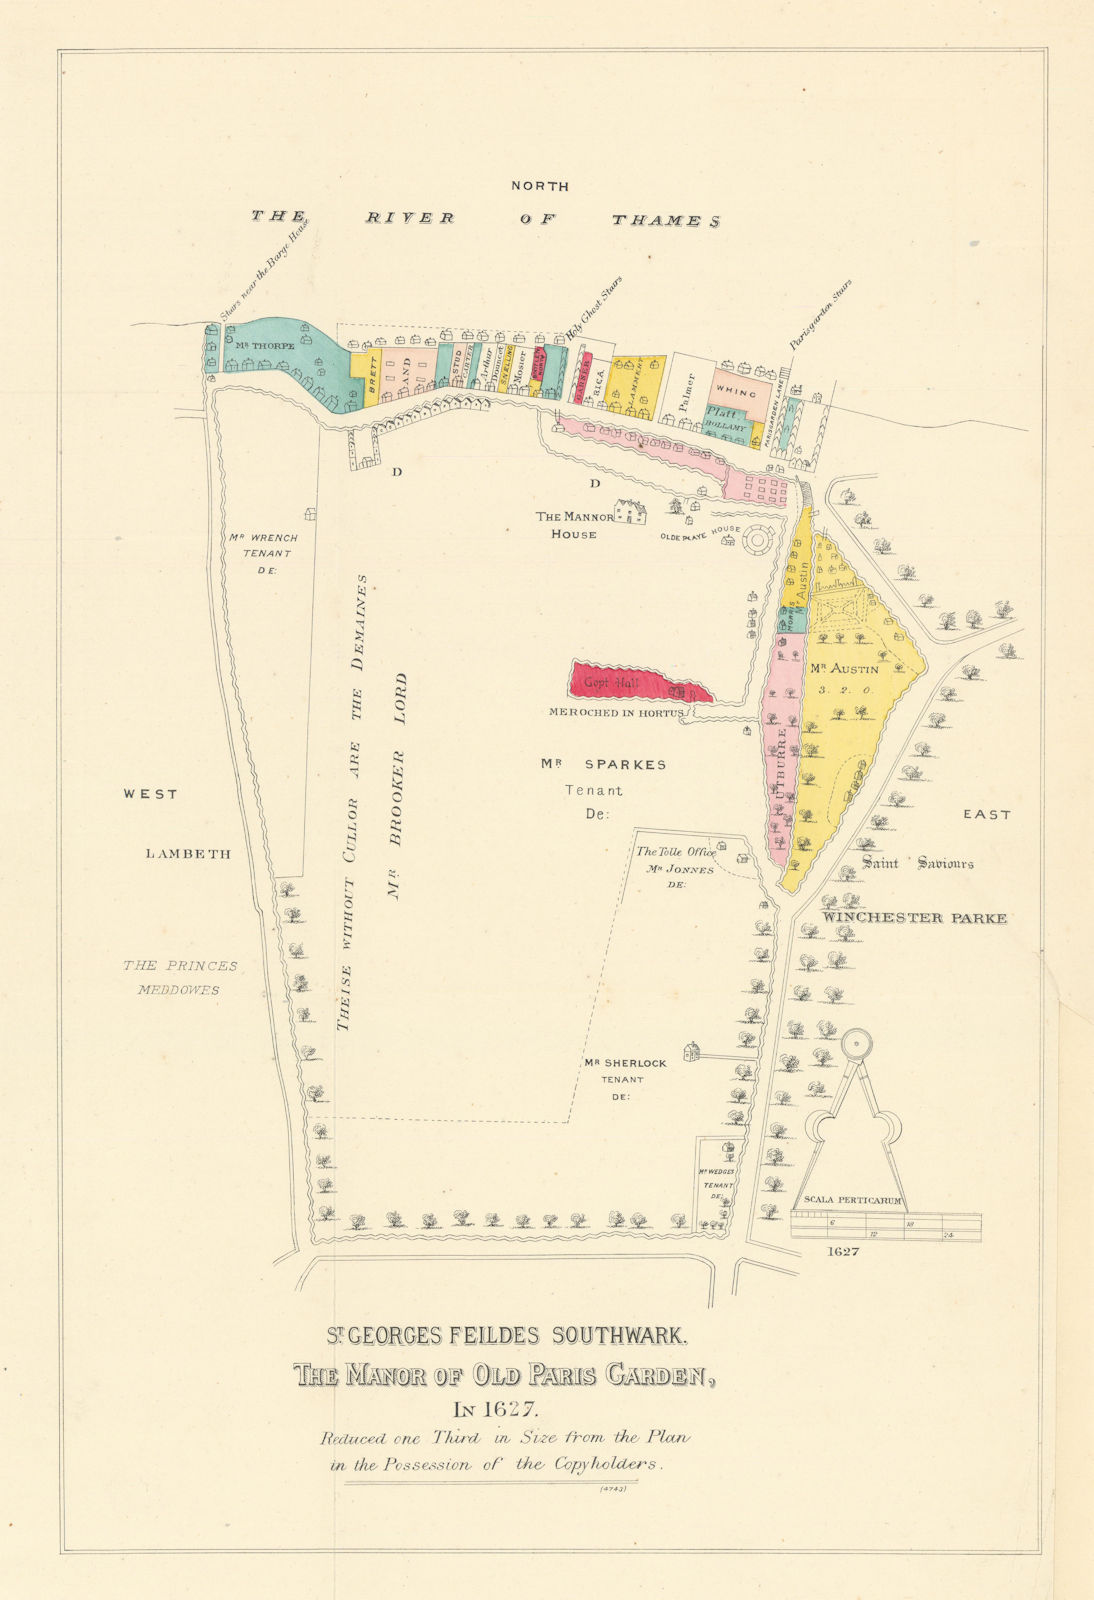 St. Georges Feildes Southwark. Manor of Old Paris Garden in 1627 (1881) map